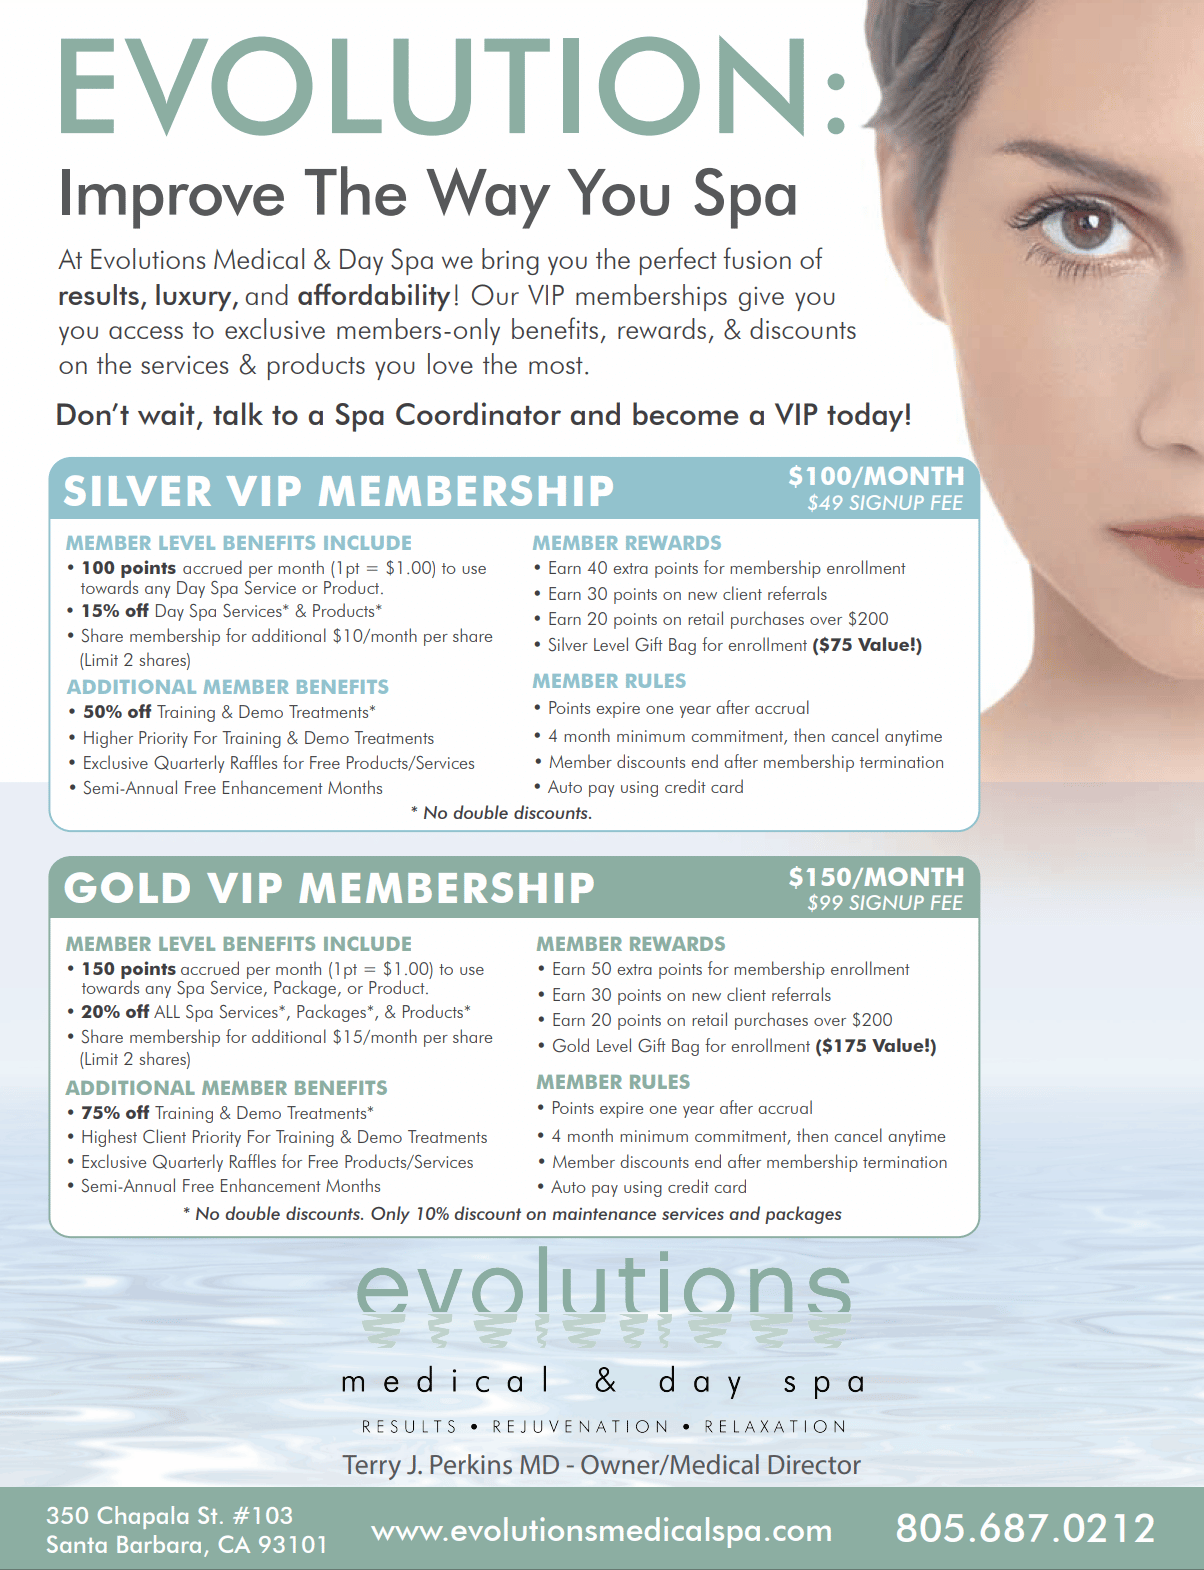 Evolutions Medical and Day Spa Vip Membership Program